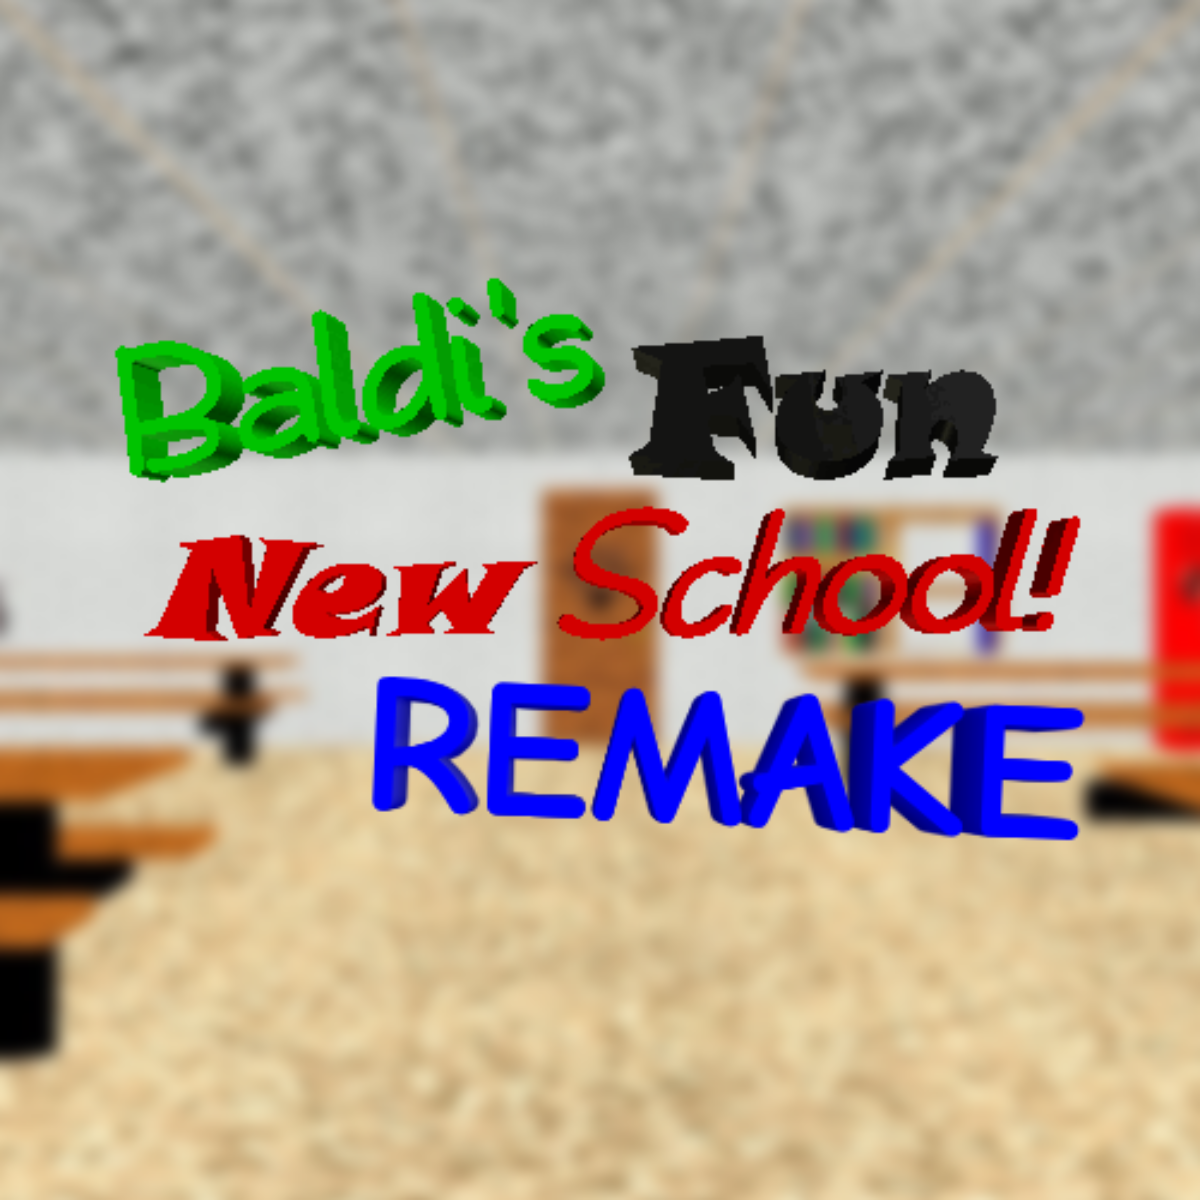 Baldi's Fun New School REMAKE